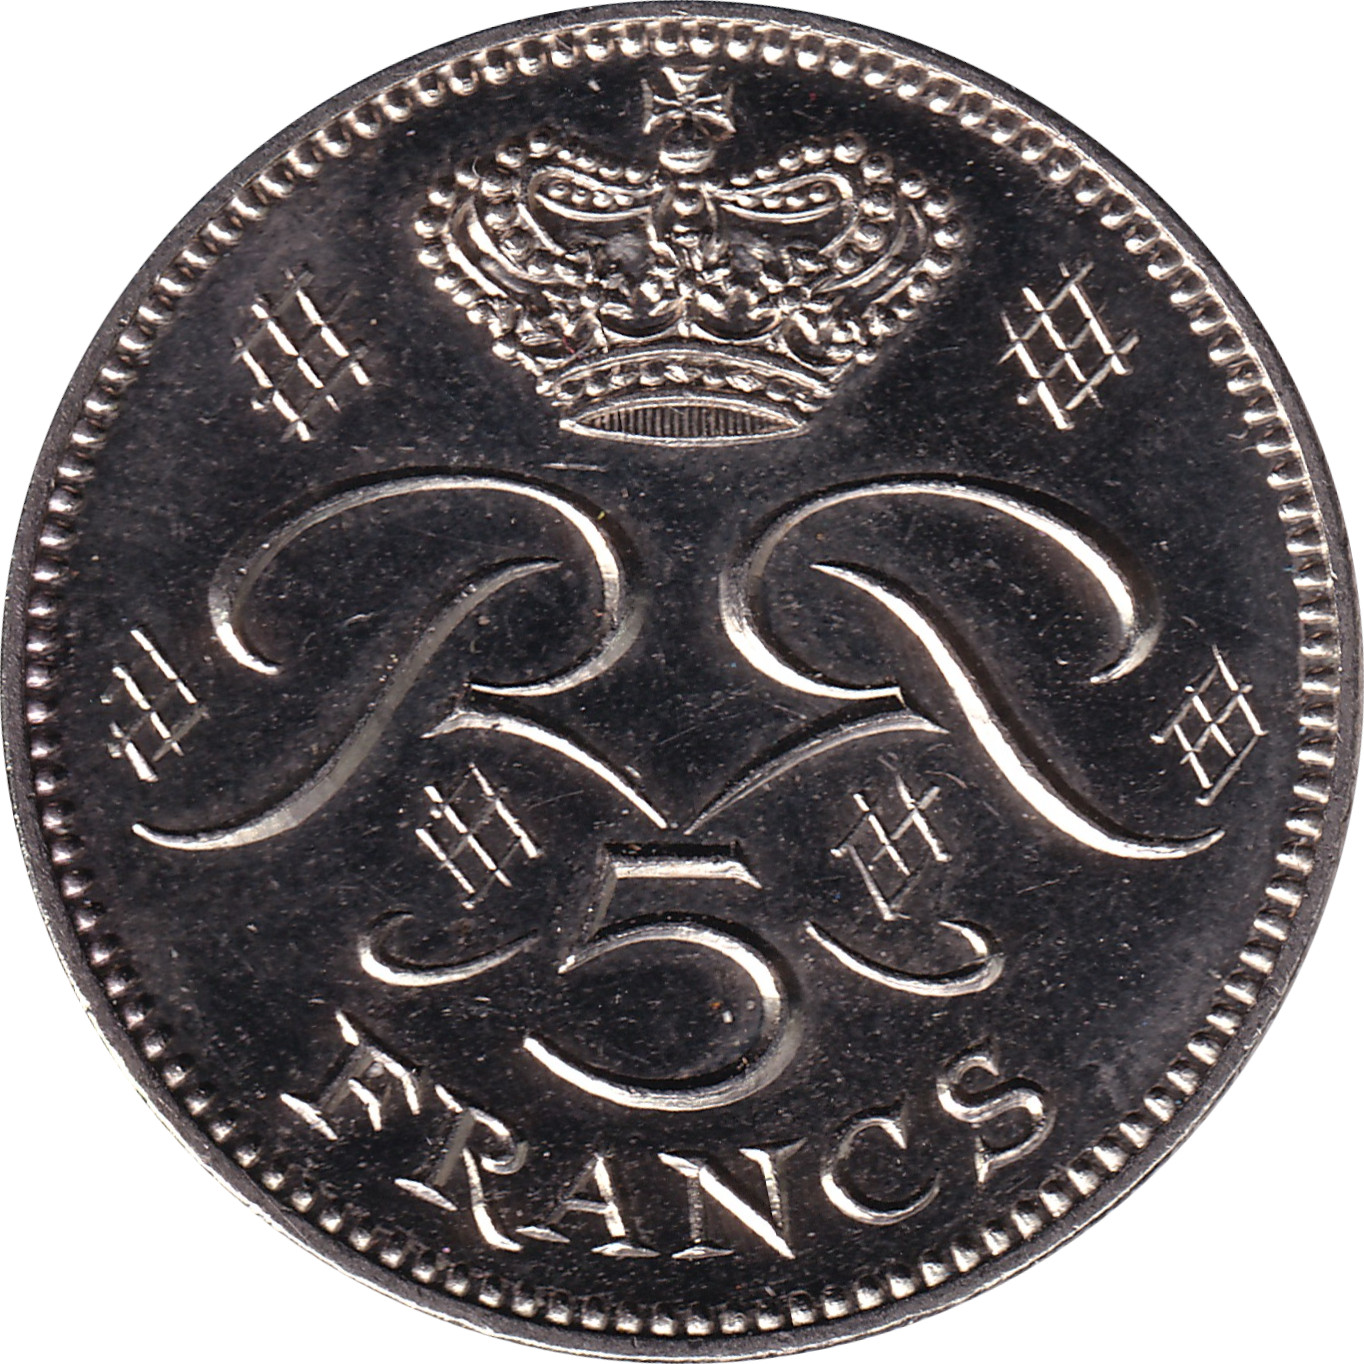 5 francs - Rainier III - Monogramme